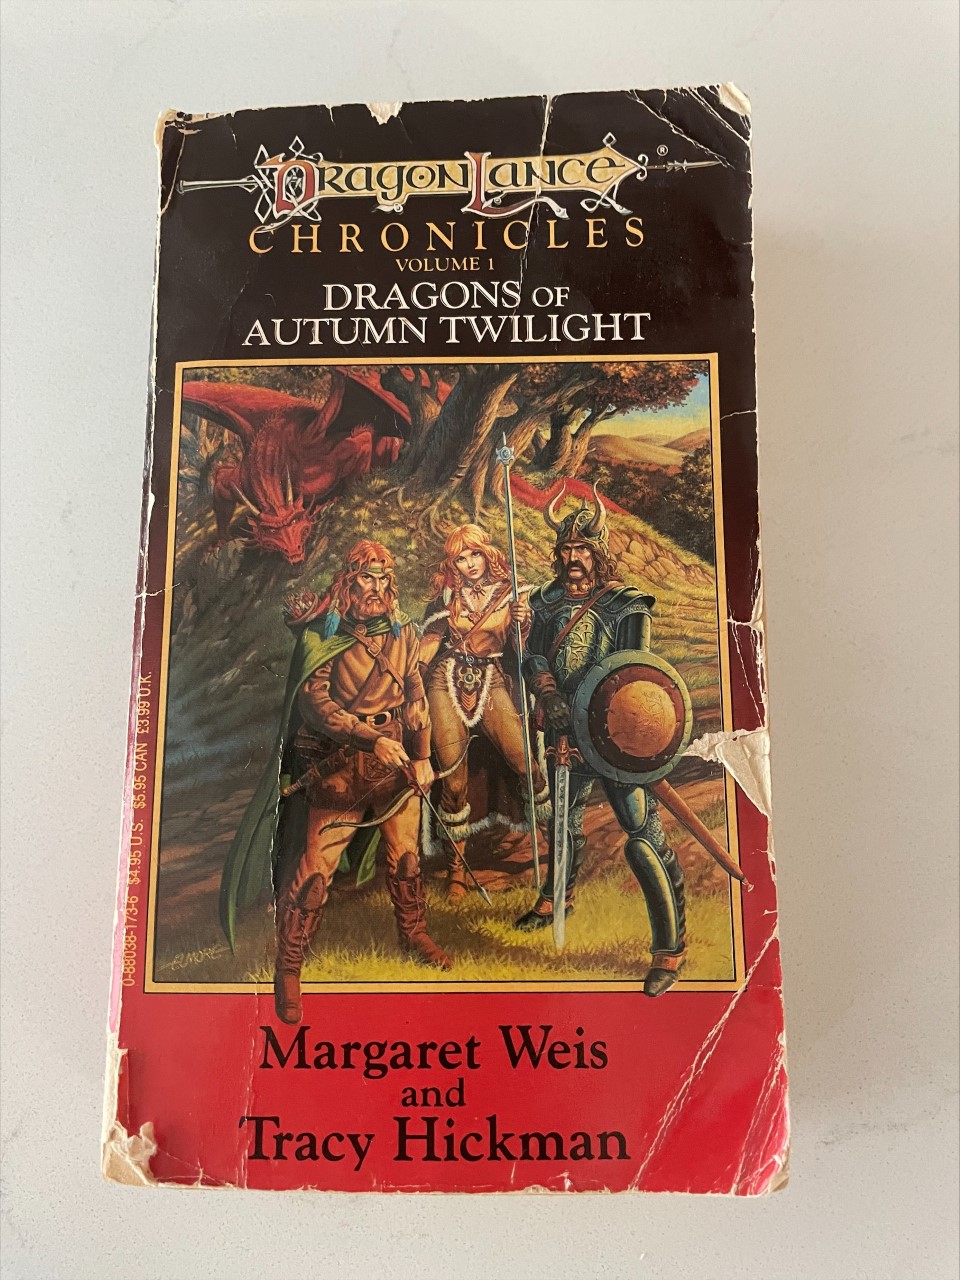 DragonLance Dragons of Autumn Twilight – Chapter 1